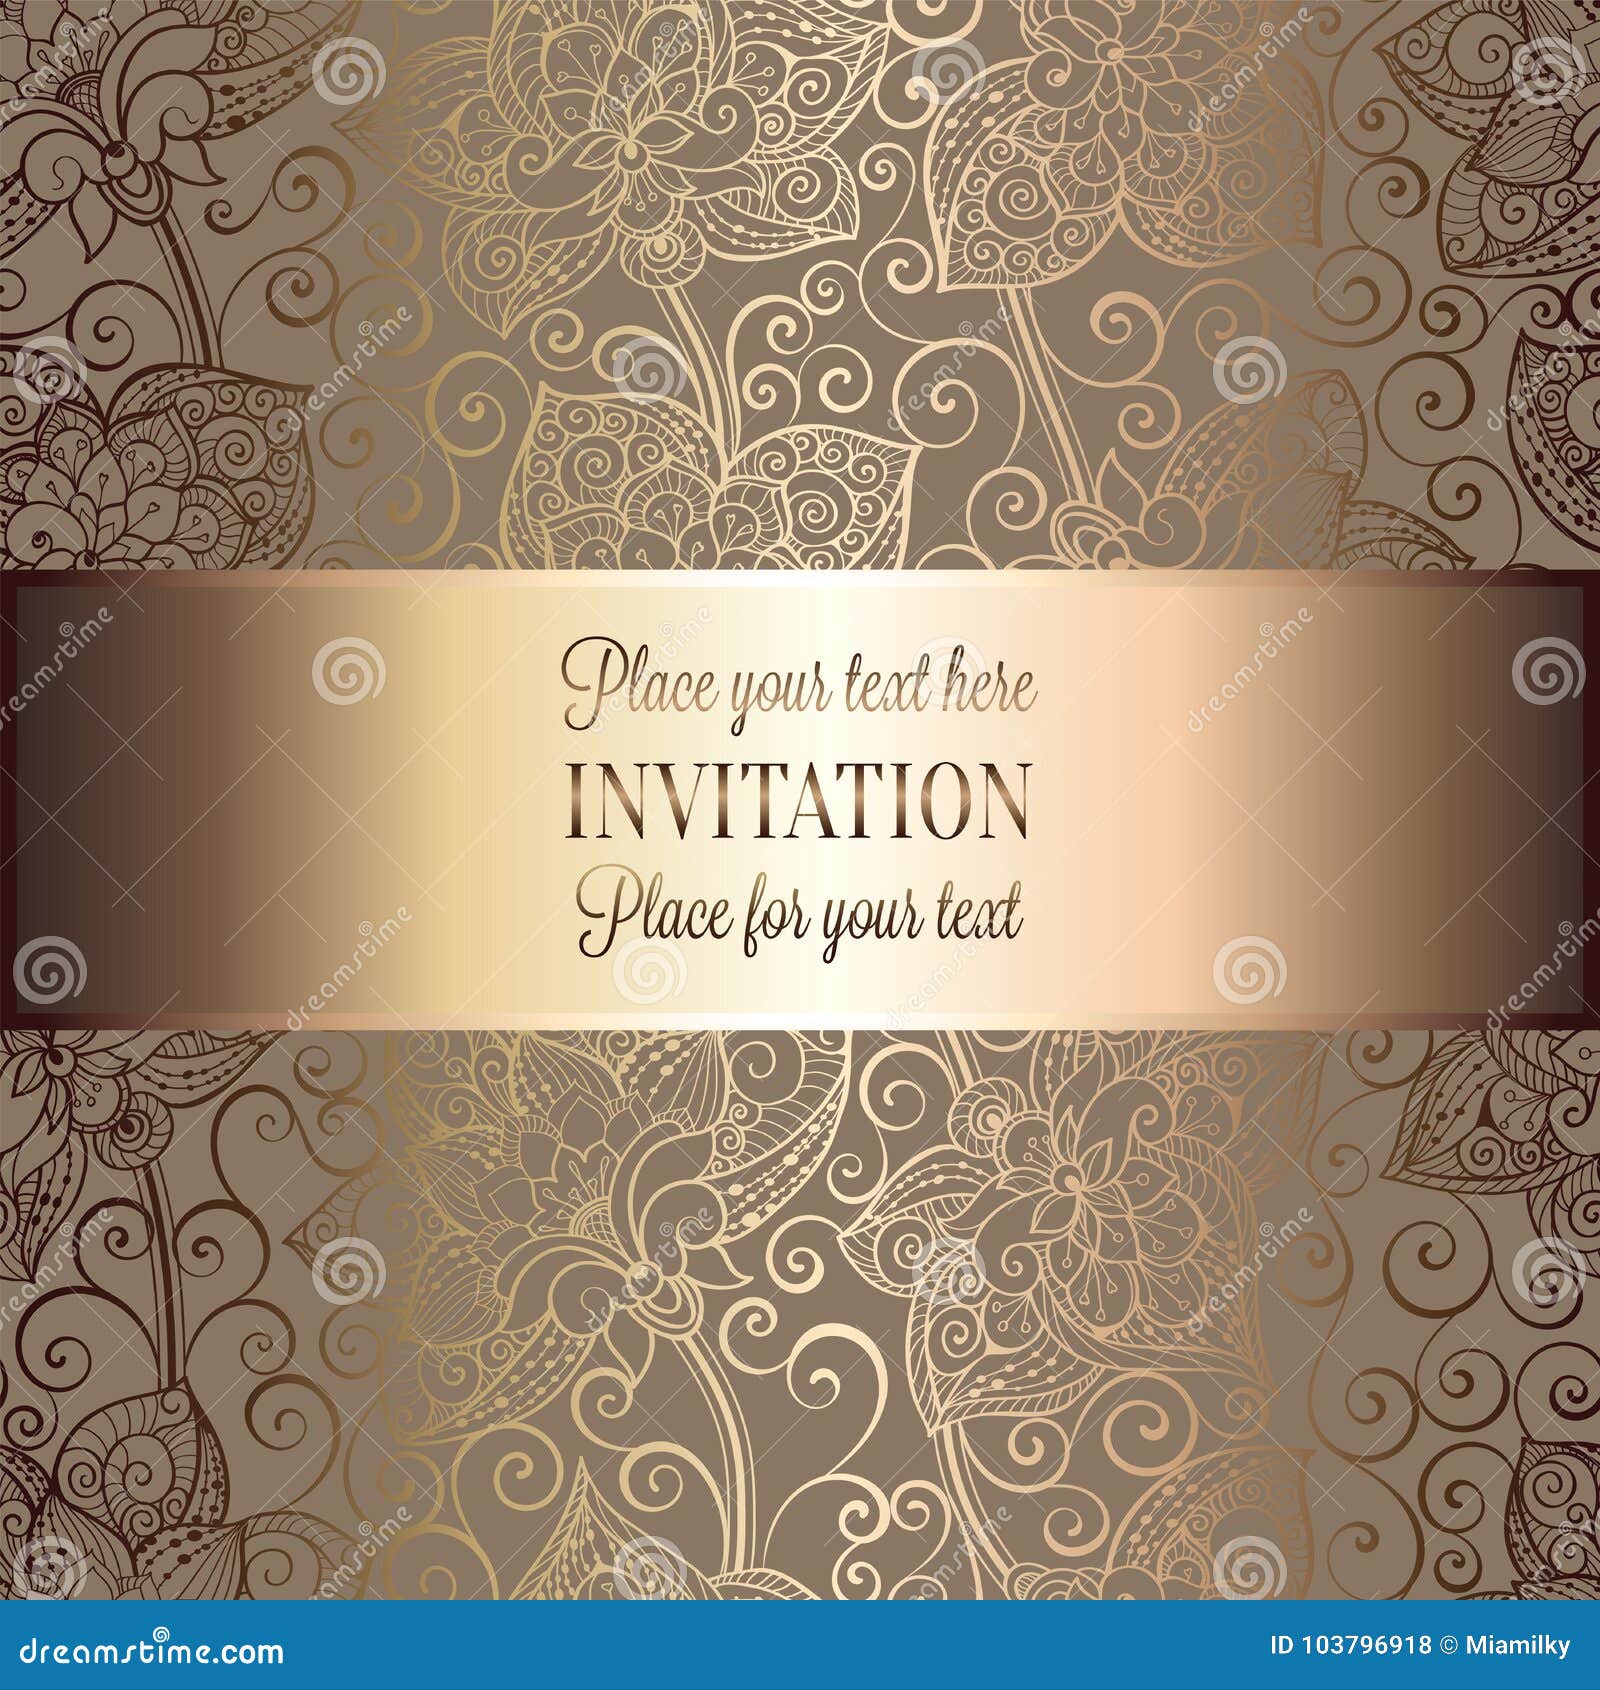 Wedding Traditional Indian Wedding Invitation Card Background Design Hd